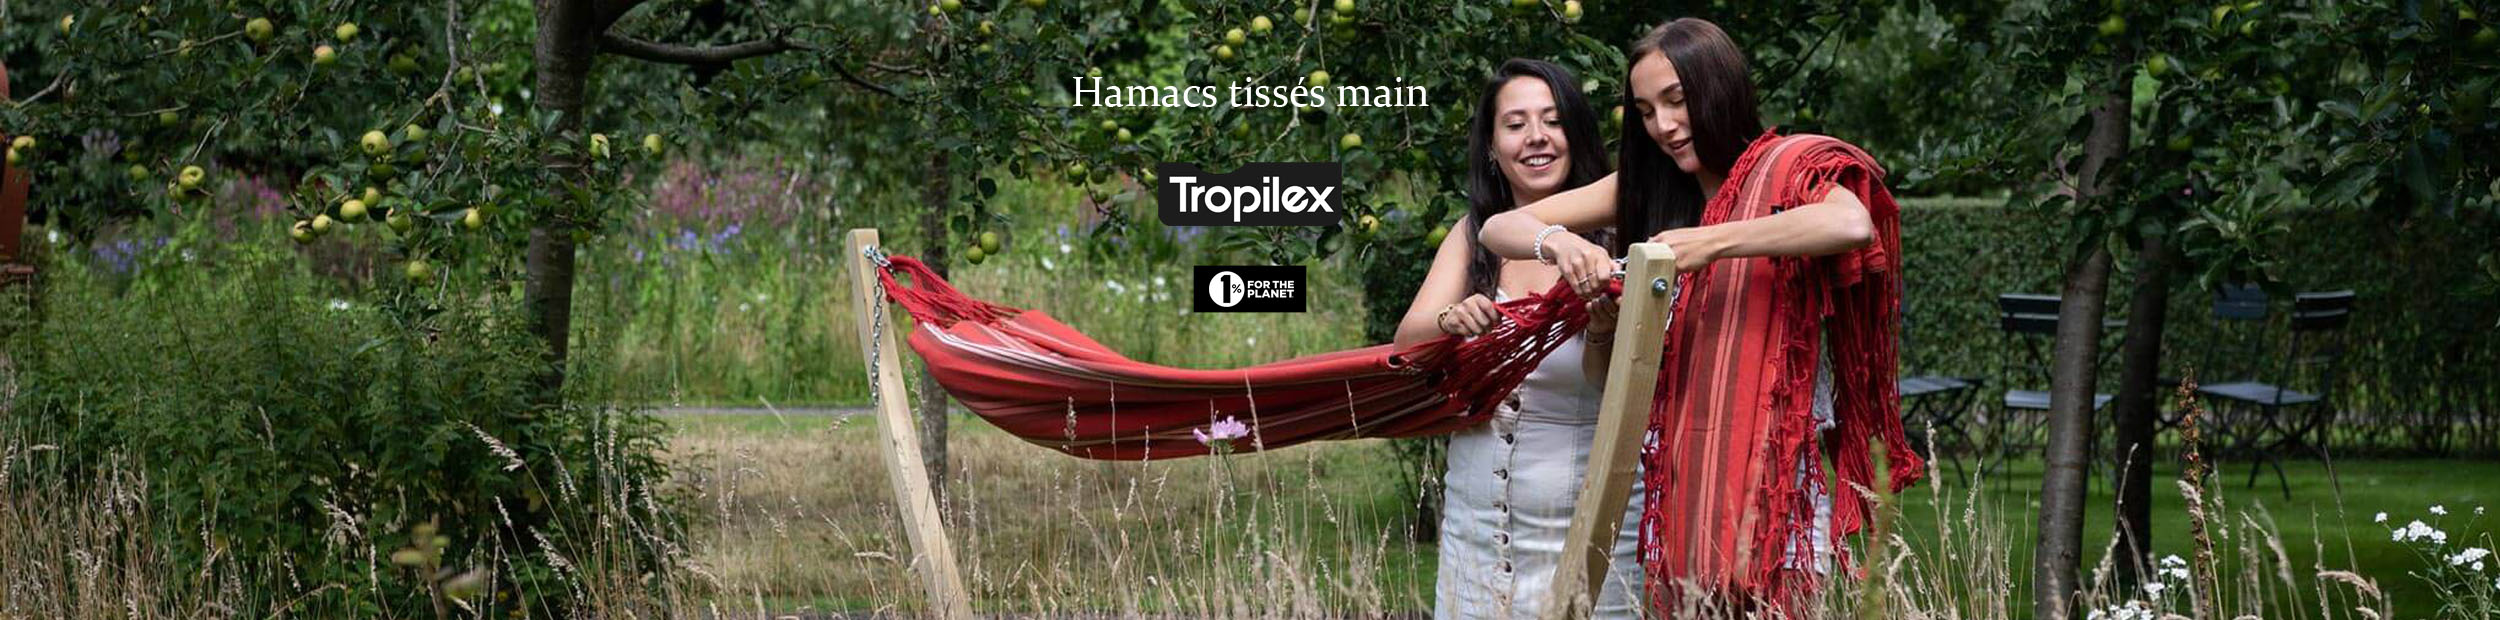 Hamac Tropilex kit rouge